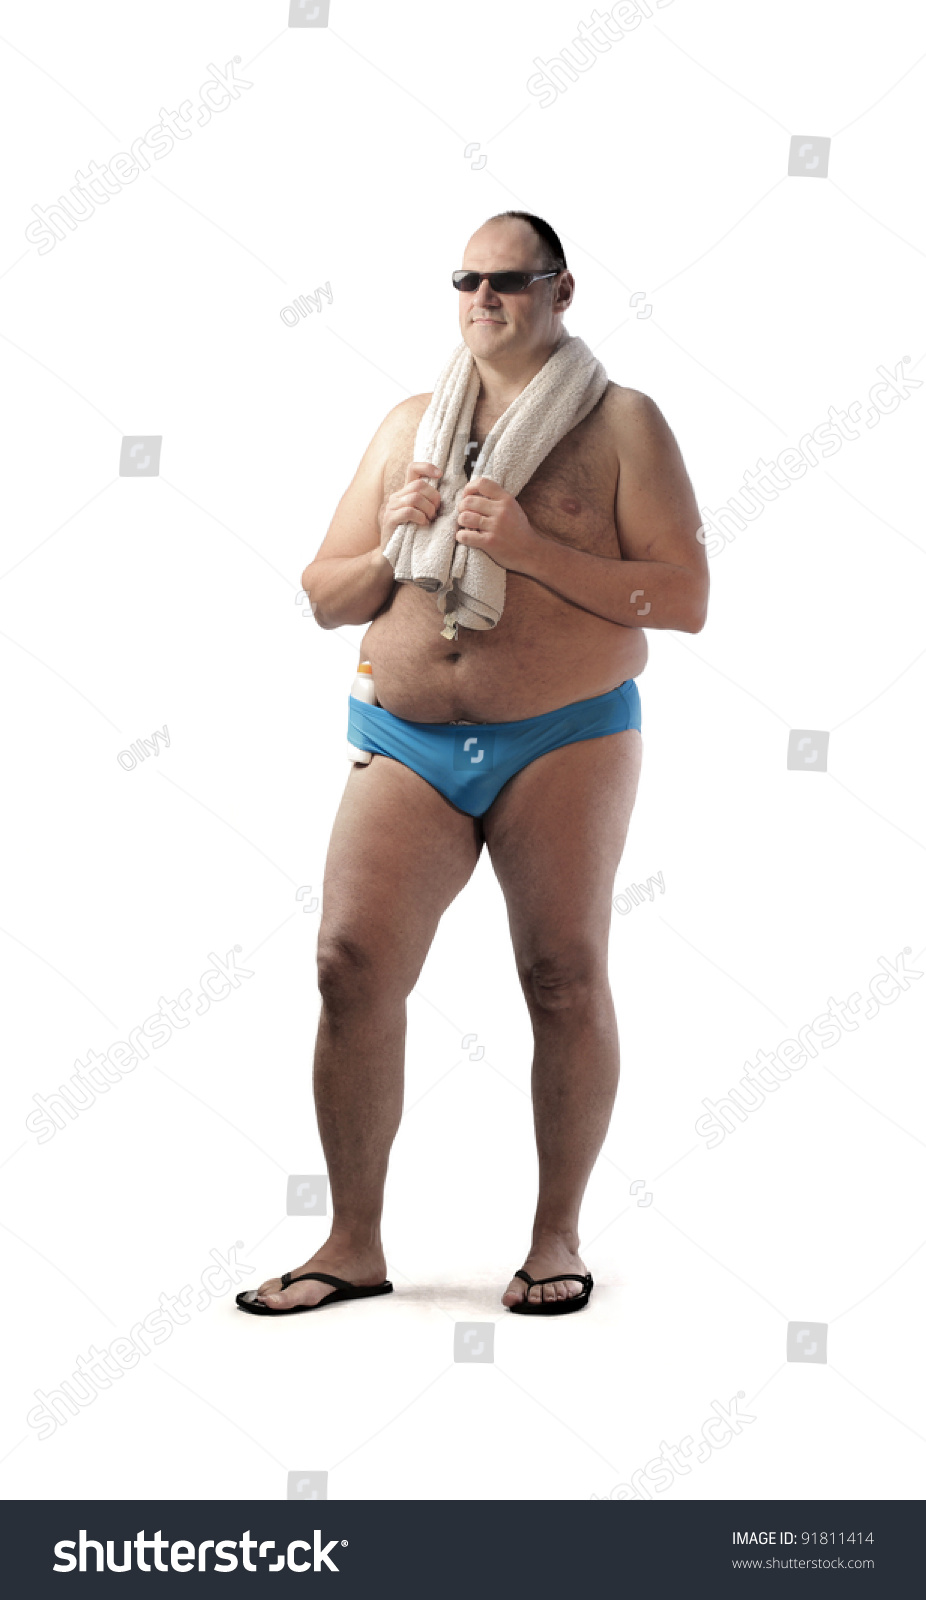 Fat Guy Bathing Suit 58